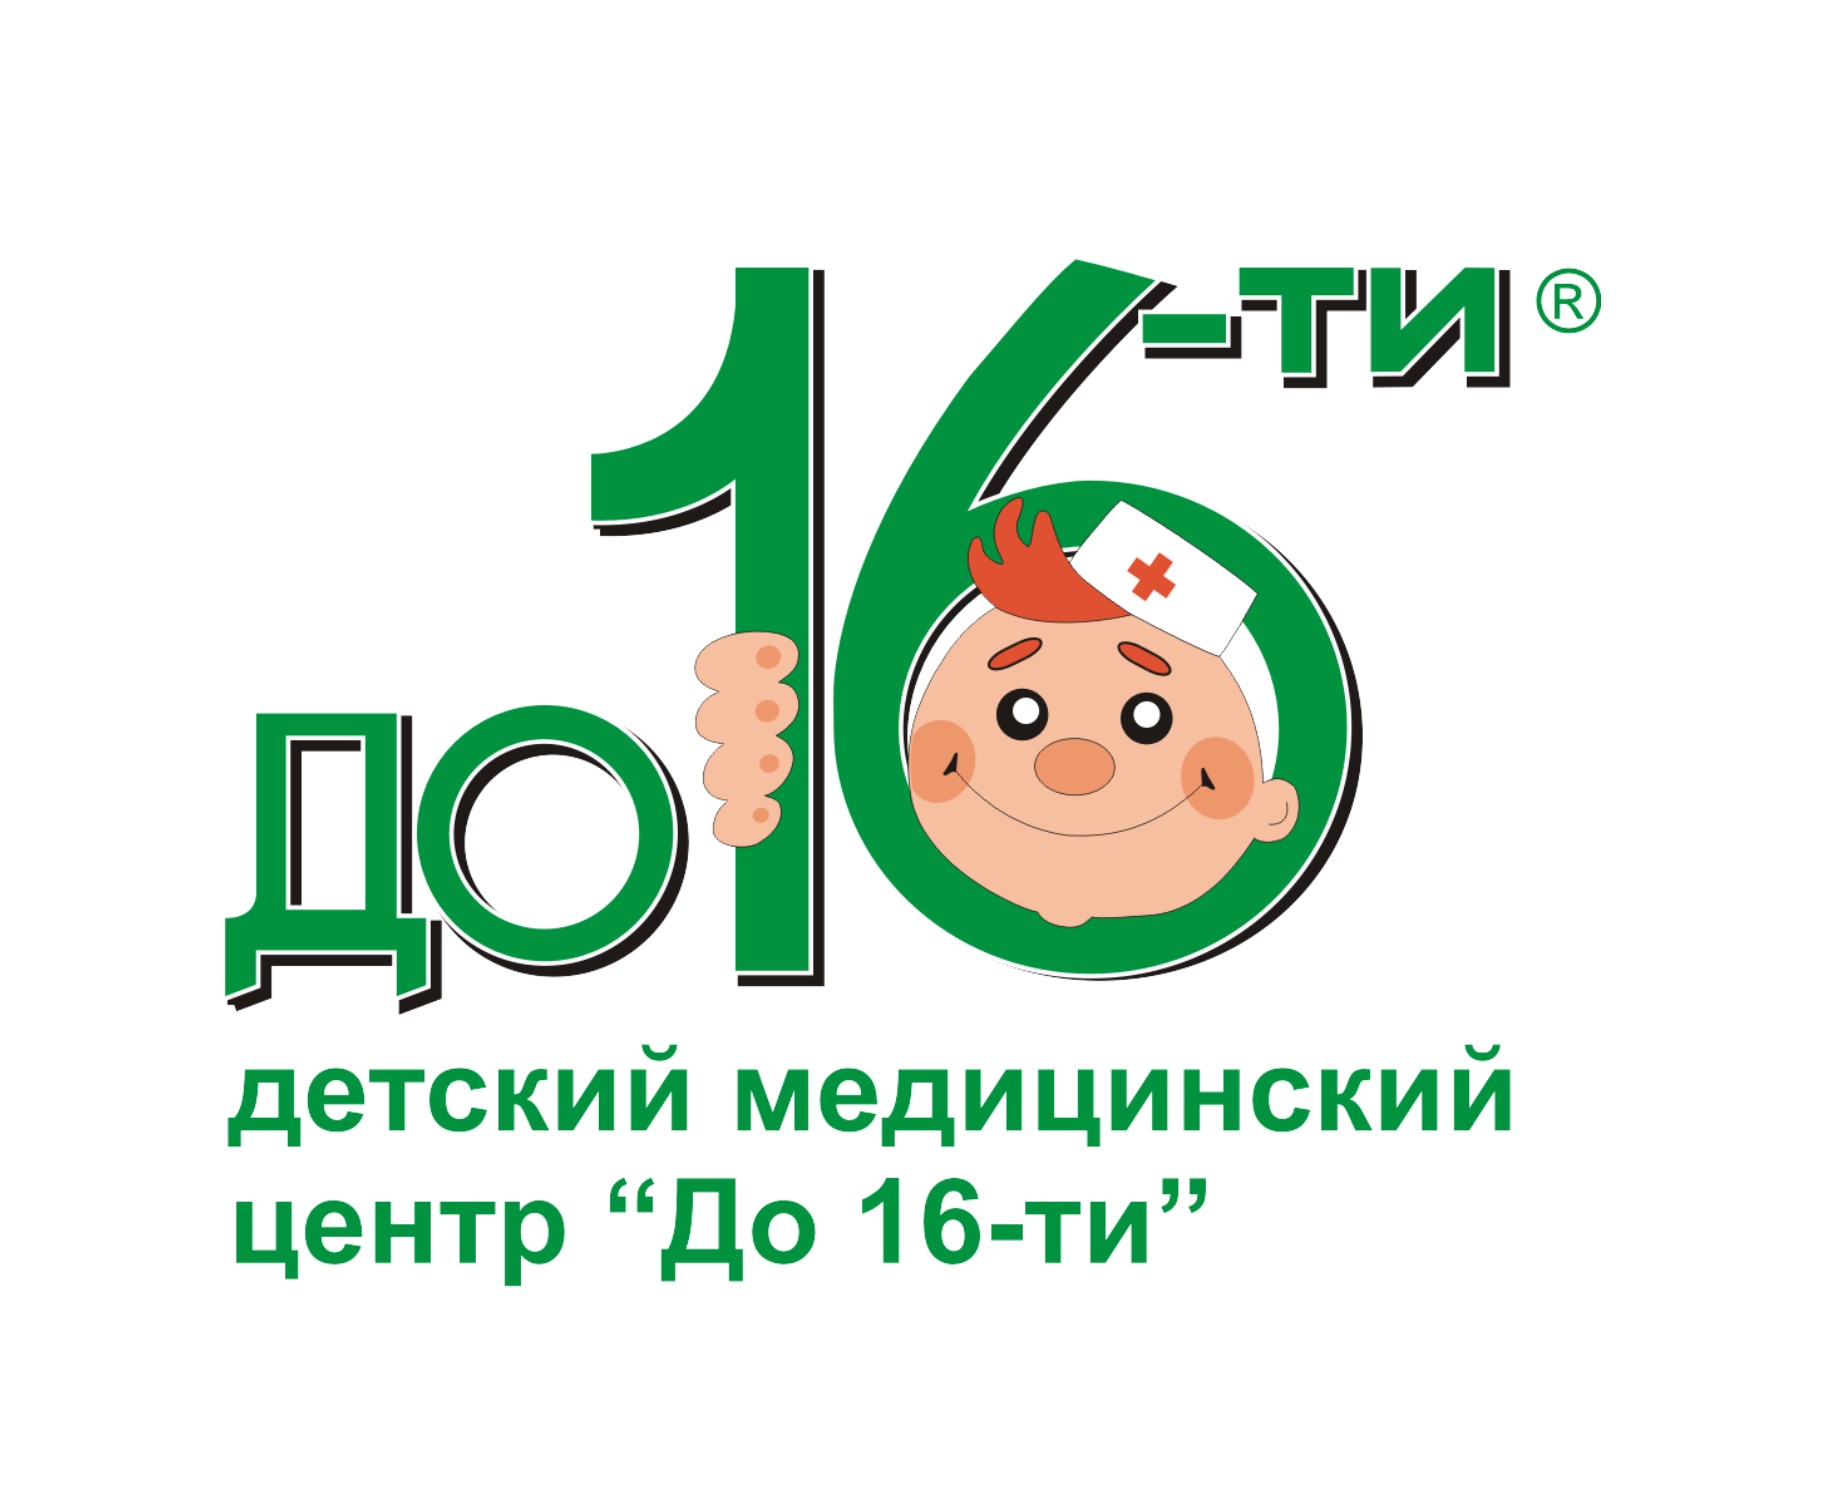 Детский медицинский центр "До 16-ти"